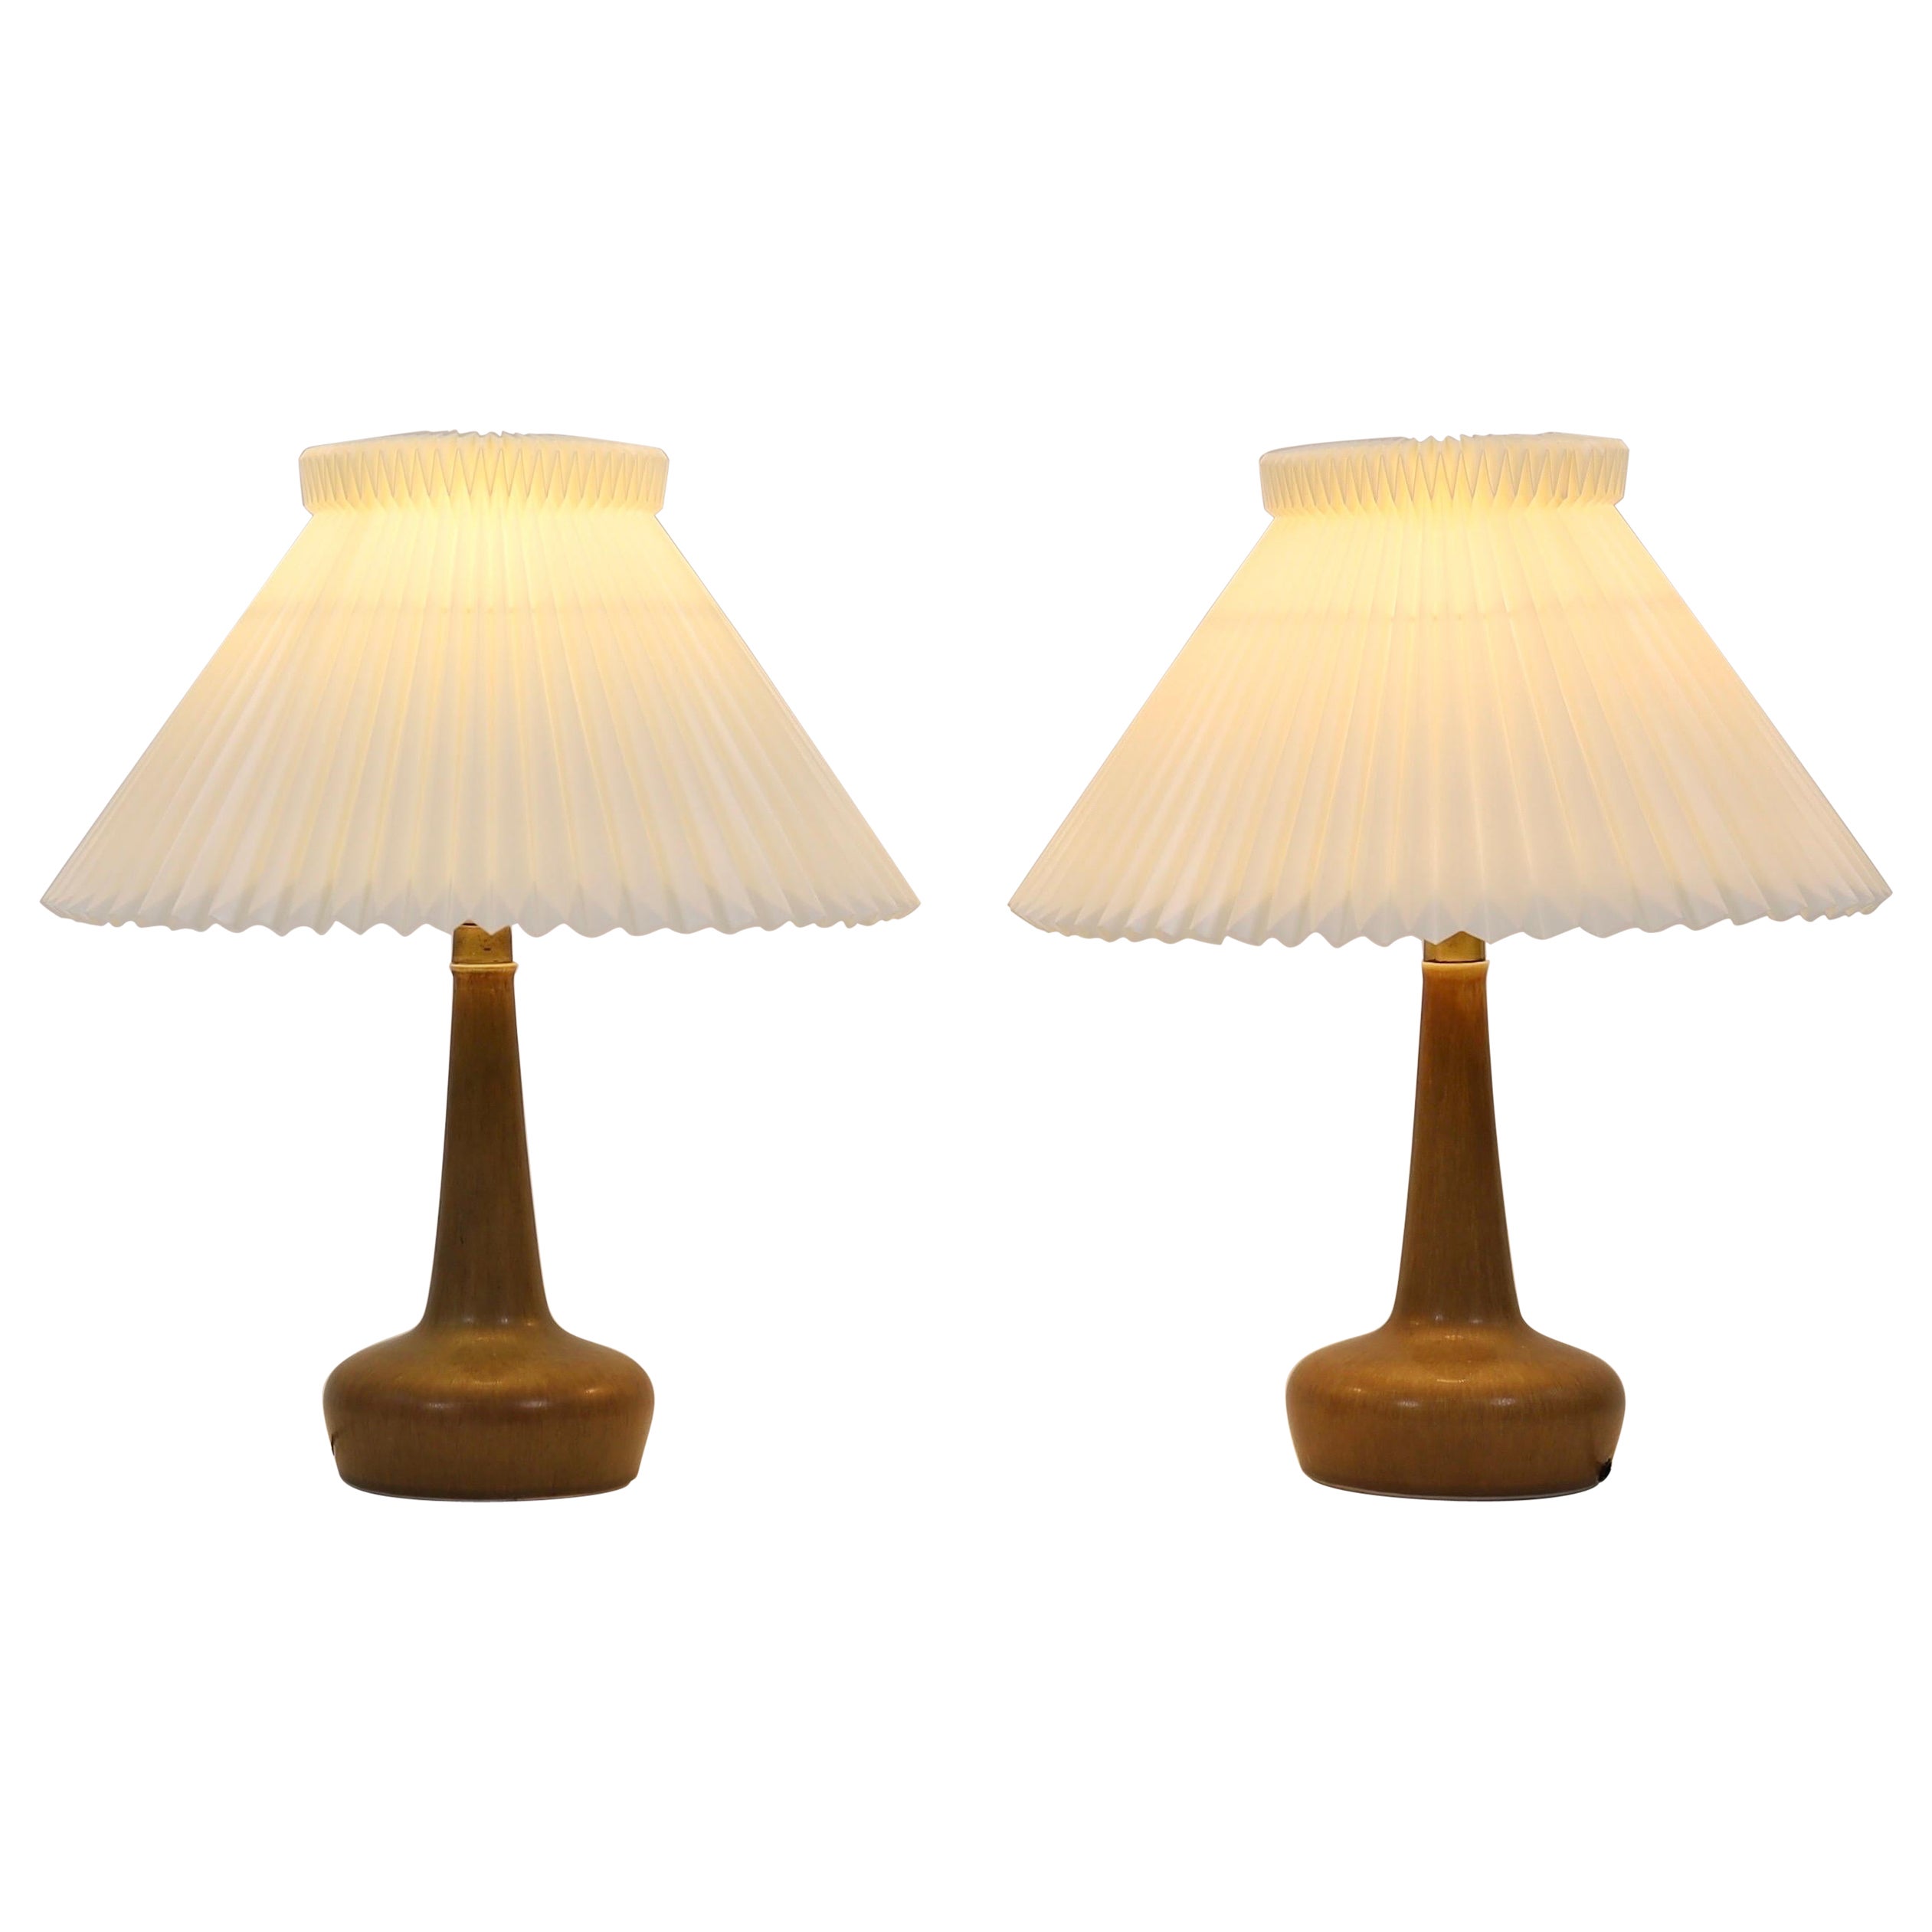 Set of Ceramic Table Lamps by Esben Klint for Le Klint, 1950s, Denmark